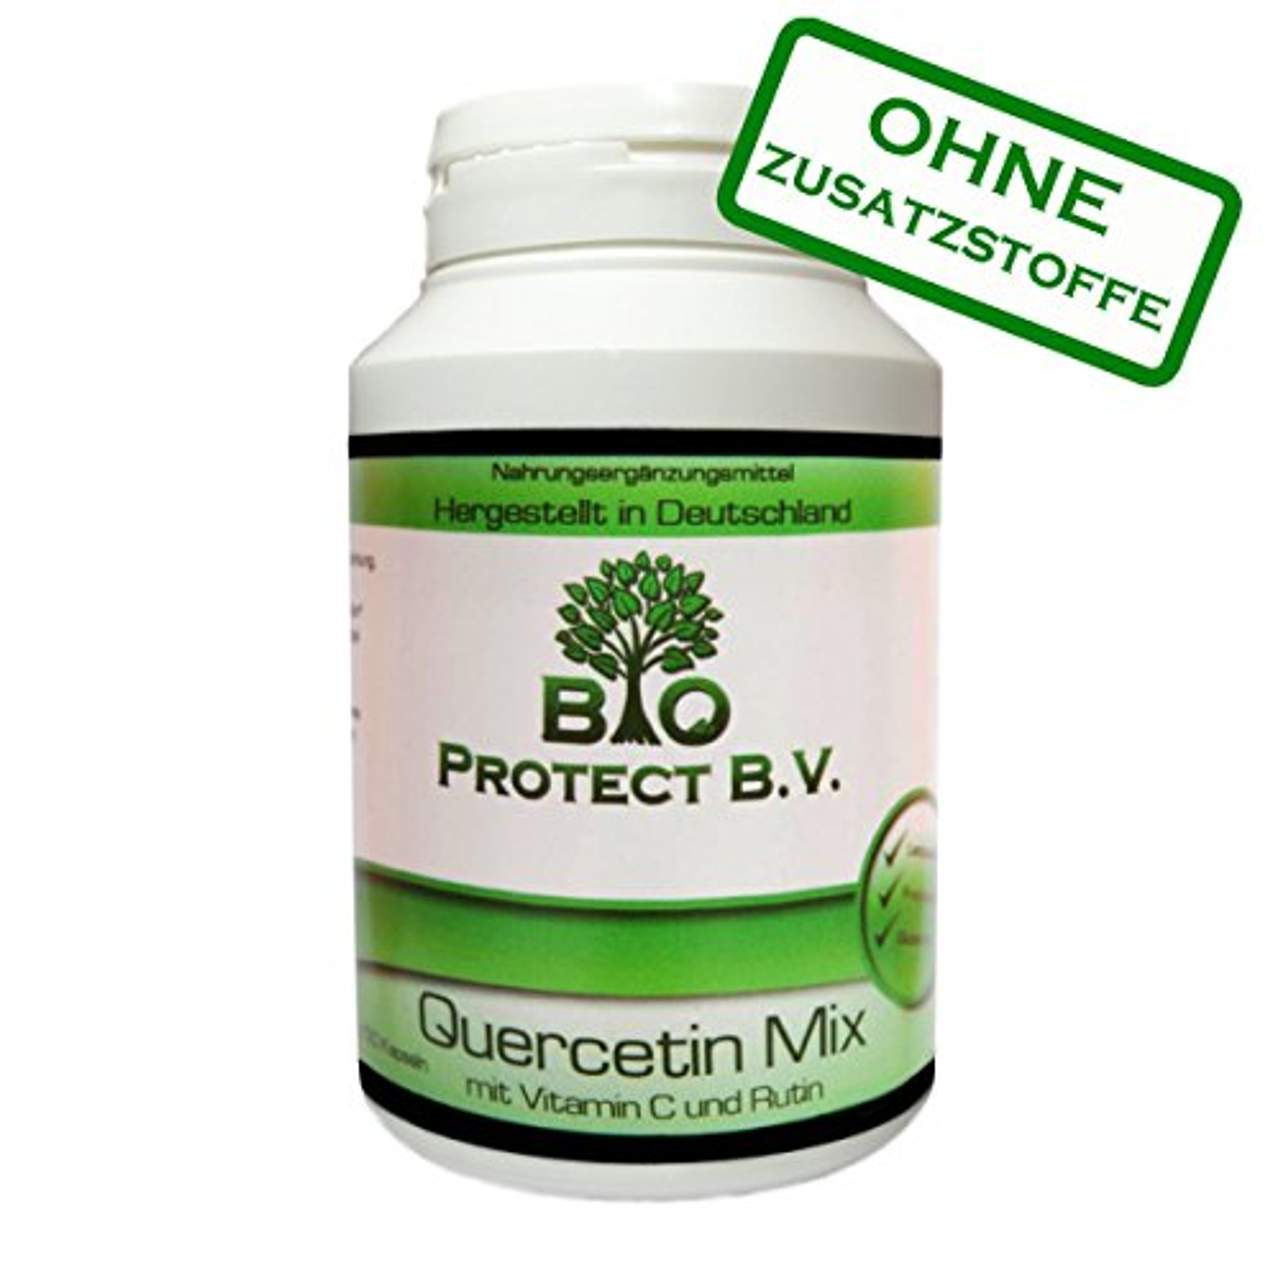 Quercetin Mix 120 Kapseln -eine Kapsel enthält 300mg Vitamin